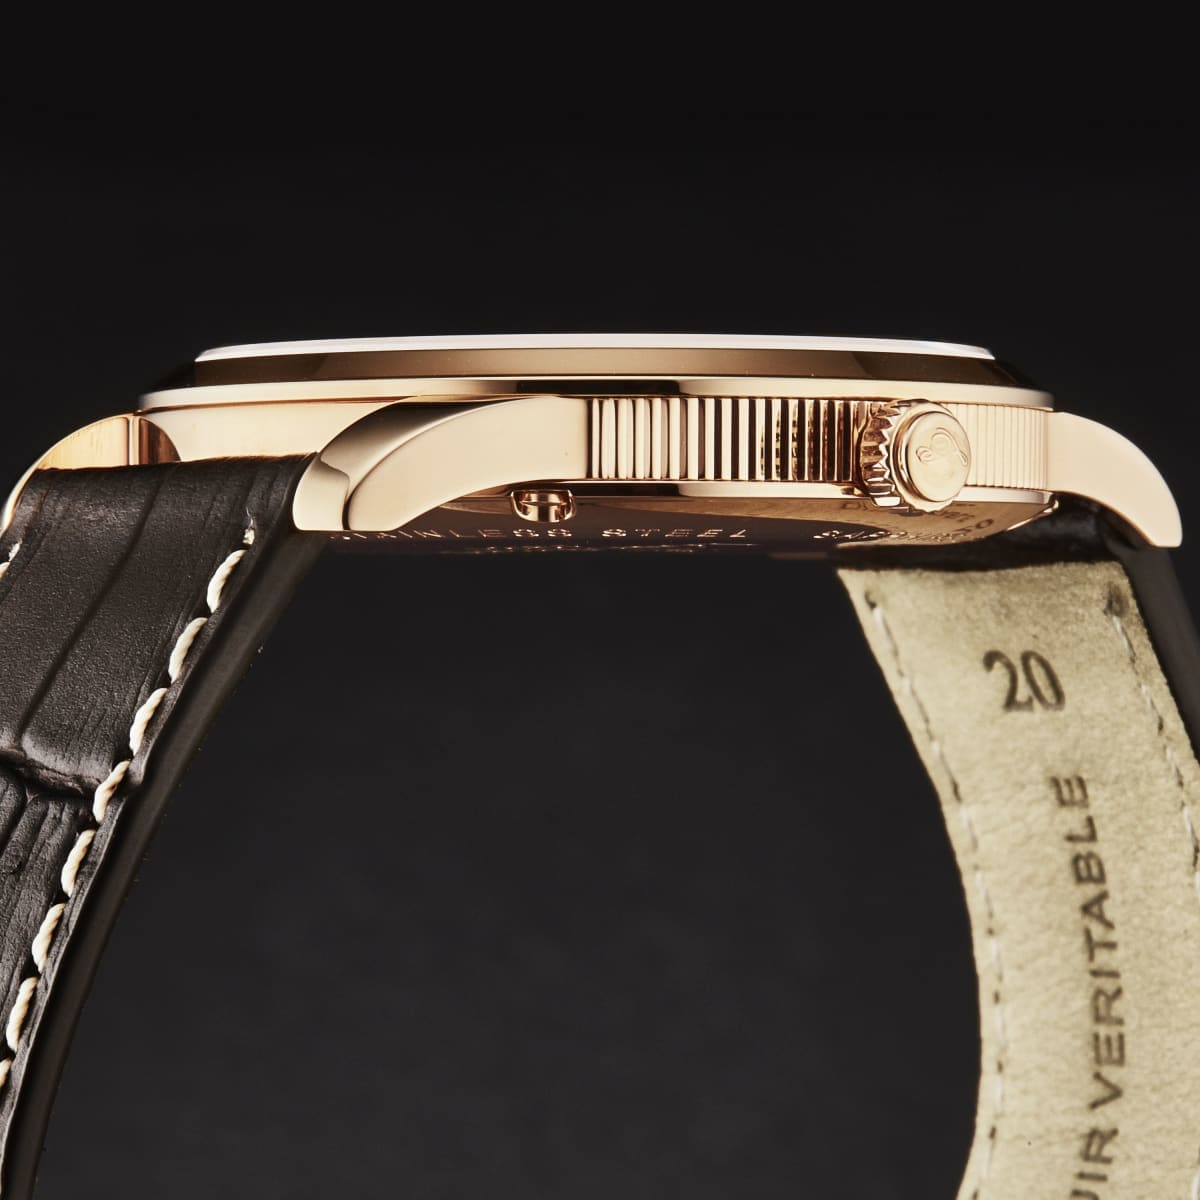 Louis Erard Men’s ’Heritage’ Silver Dial Brown Leather Strap Swiss Quartz Watch 15920AA31.BEP101 - On sale